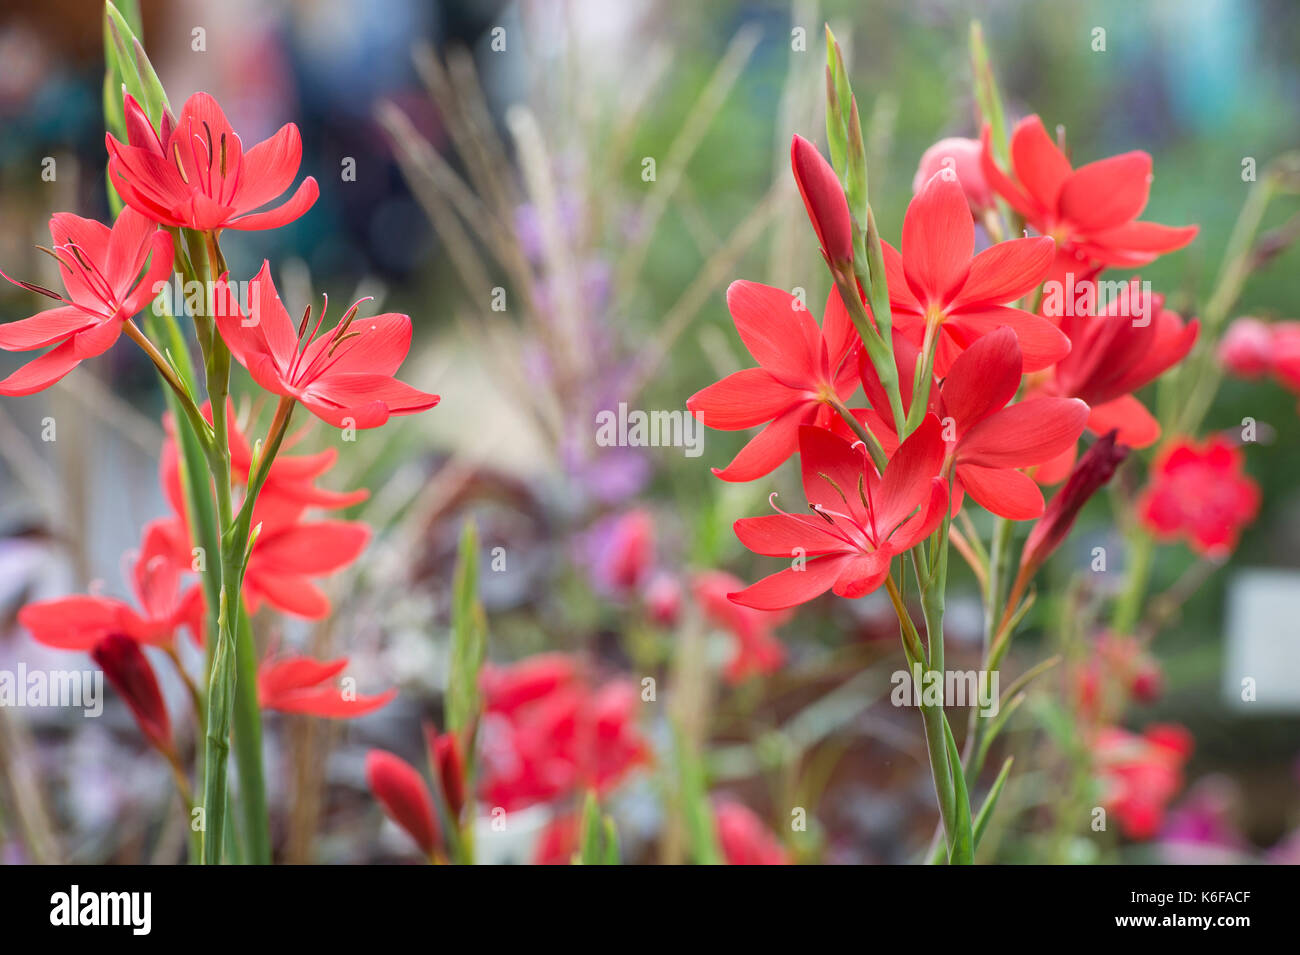 Hesperantha coccinea 'Major'. Schizostylis coccinea 'Major'. Crimson flag lily 'Major'. Kaffir lily 'Major' Stock Photo